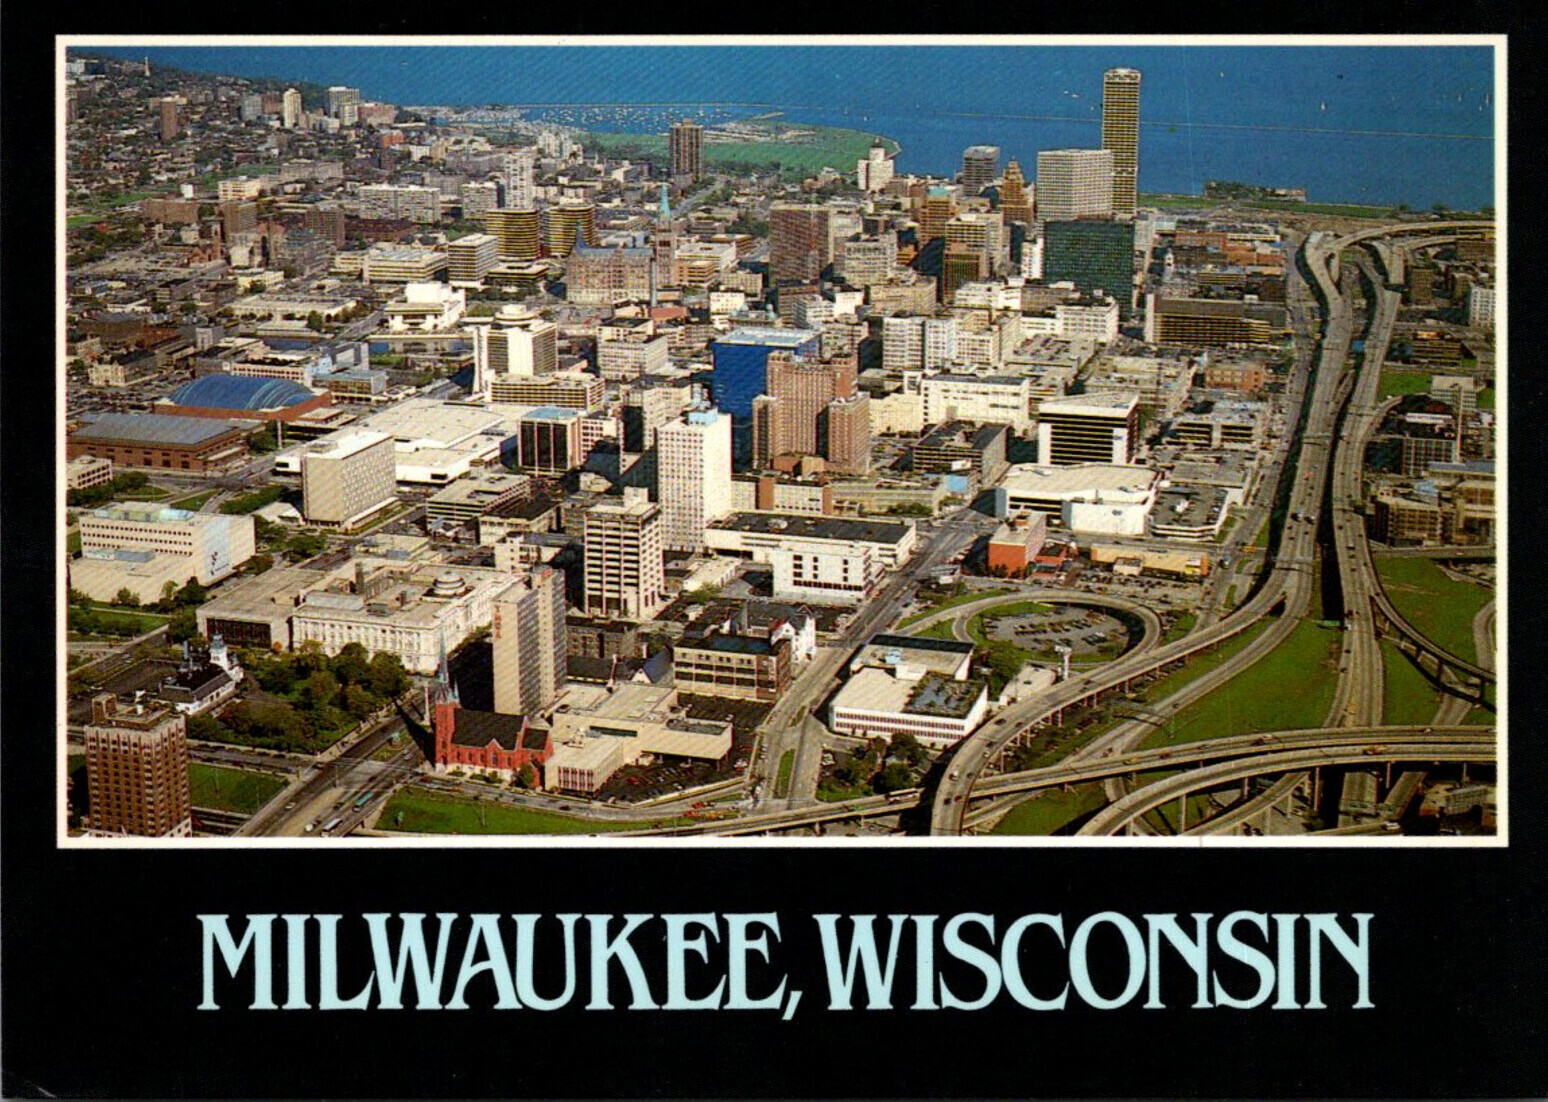  Milwaukee, Wisconsin, Aerial View of New Milwaukee